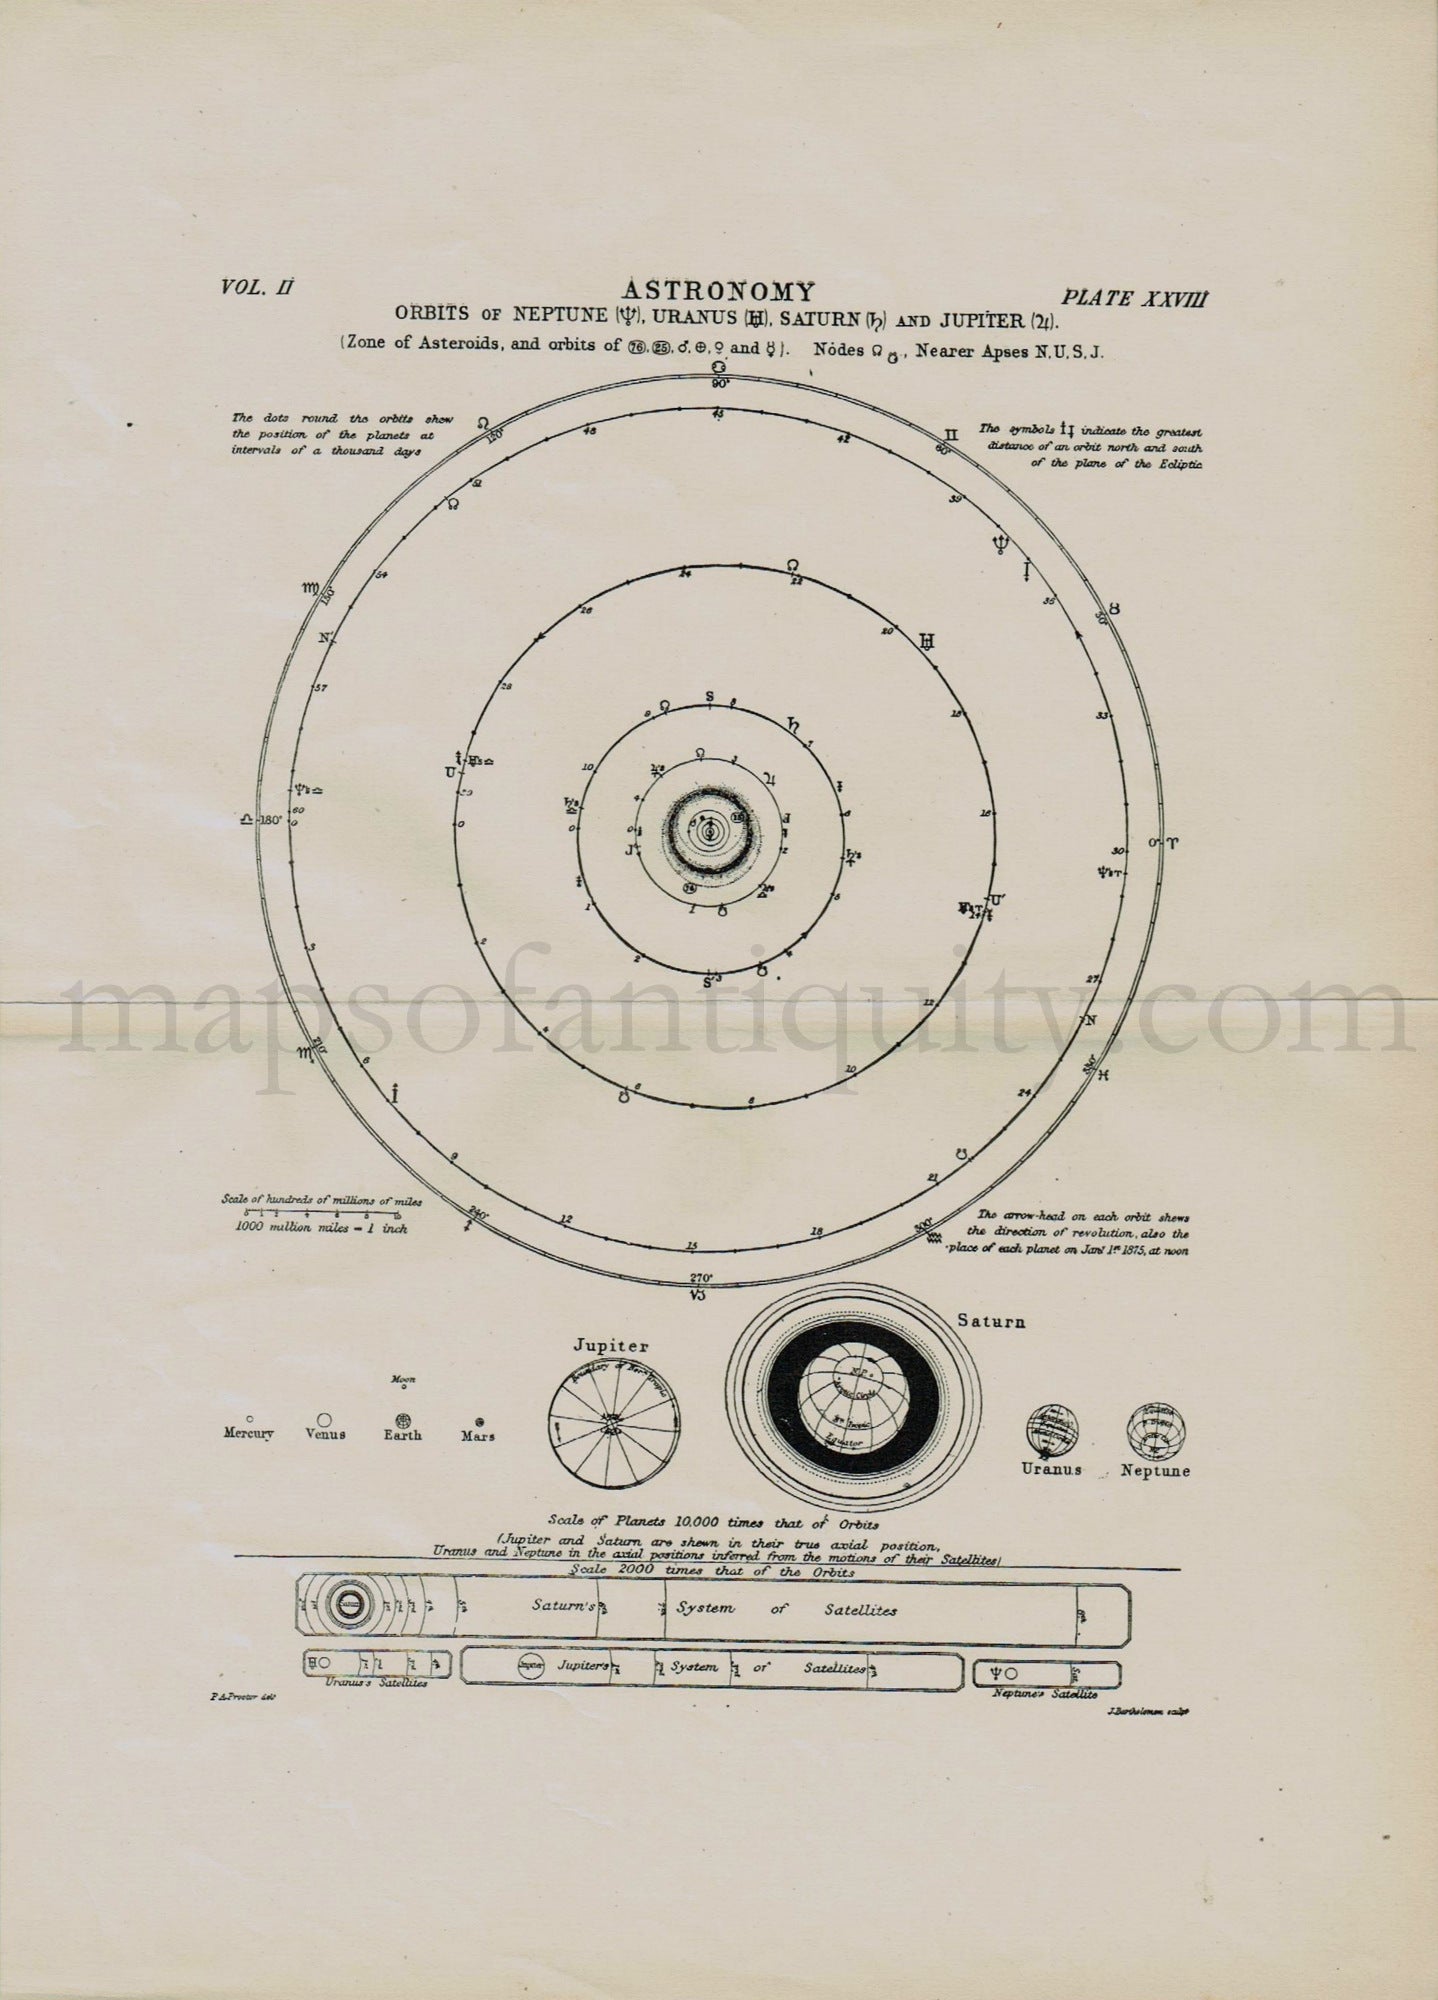 Antique-Astronomy-Orbits-of-Neptune-Uranus-Saturn-and-Jupiter-Celestial-Constellation-Print-Diagram-Star-Planets-Orbit-1890s-Maps-of-Antiquity